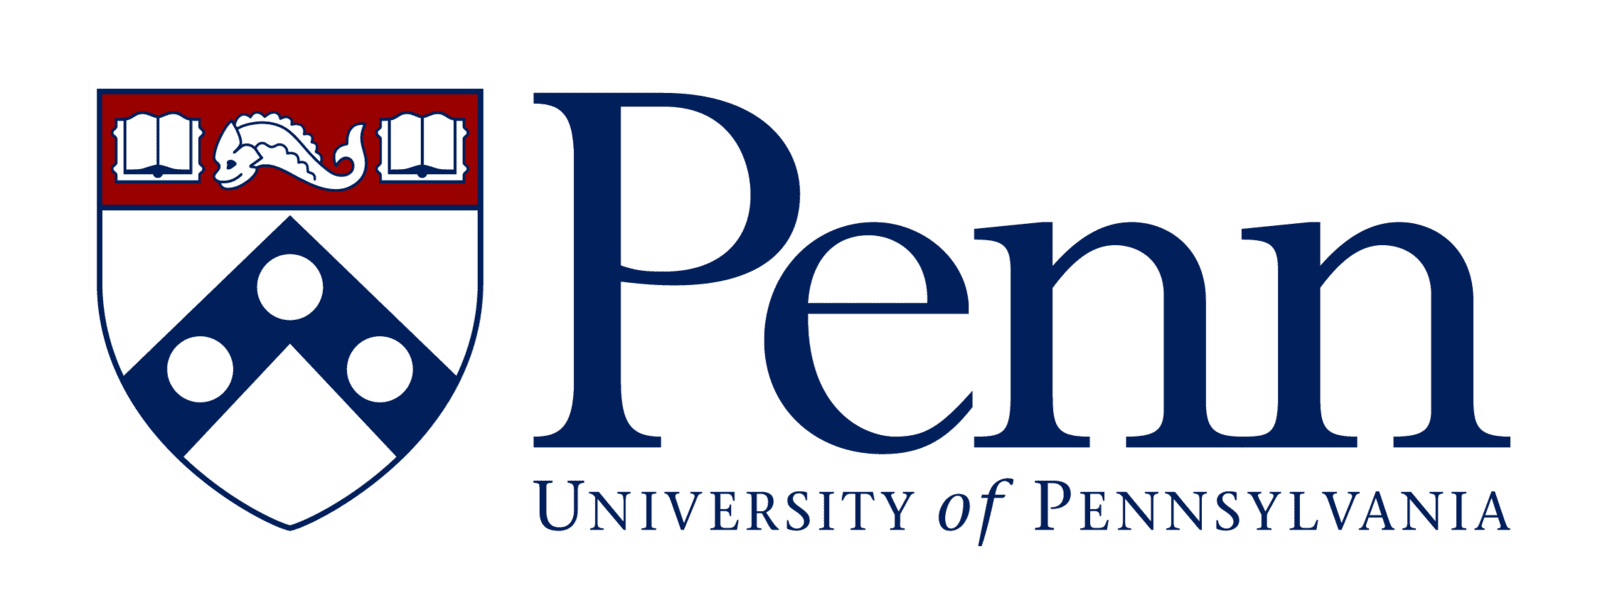 UniversityofPennsylvania_Logo